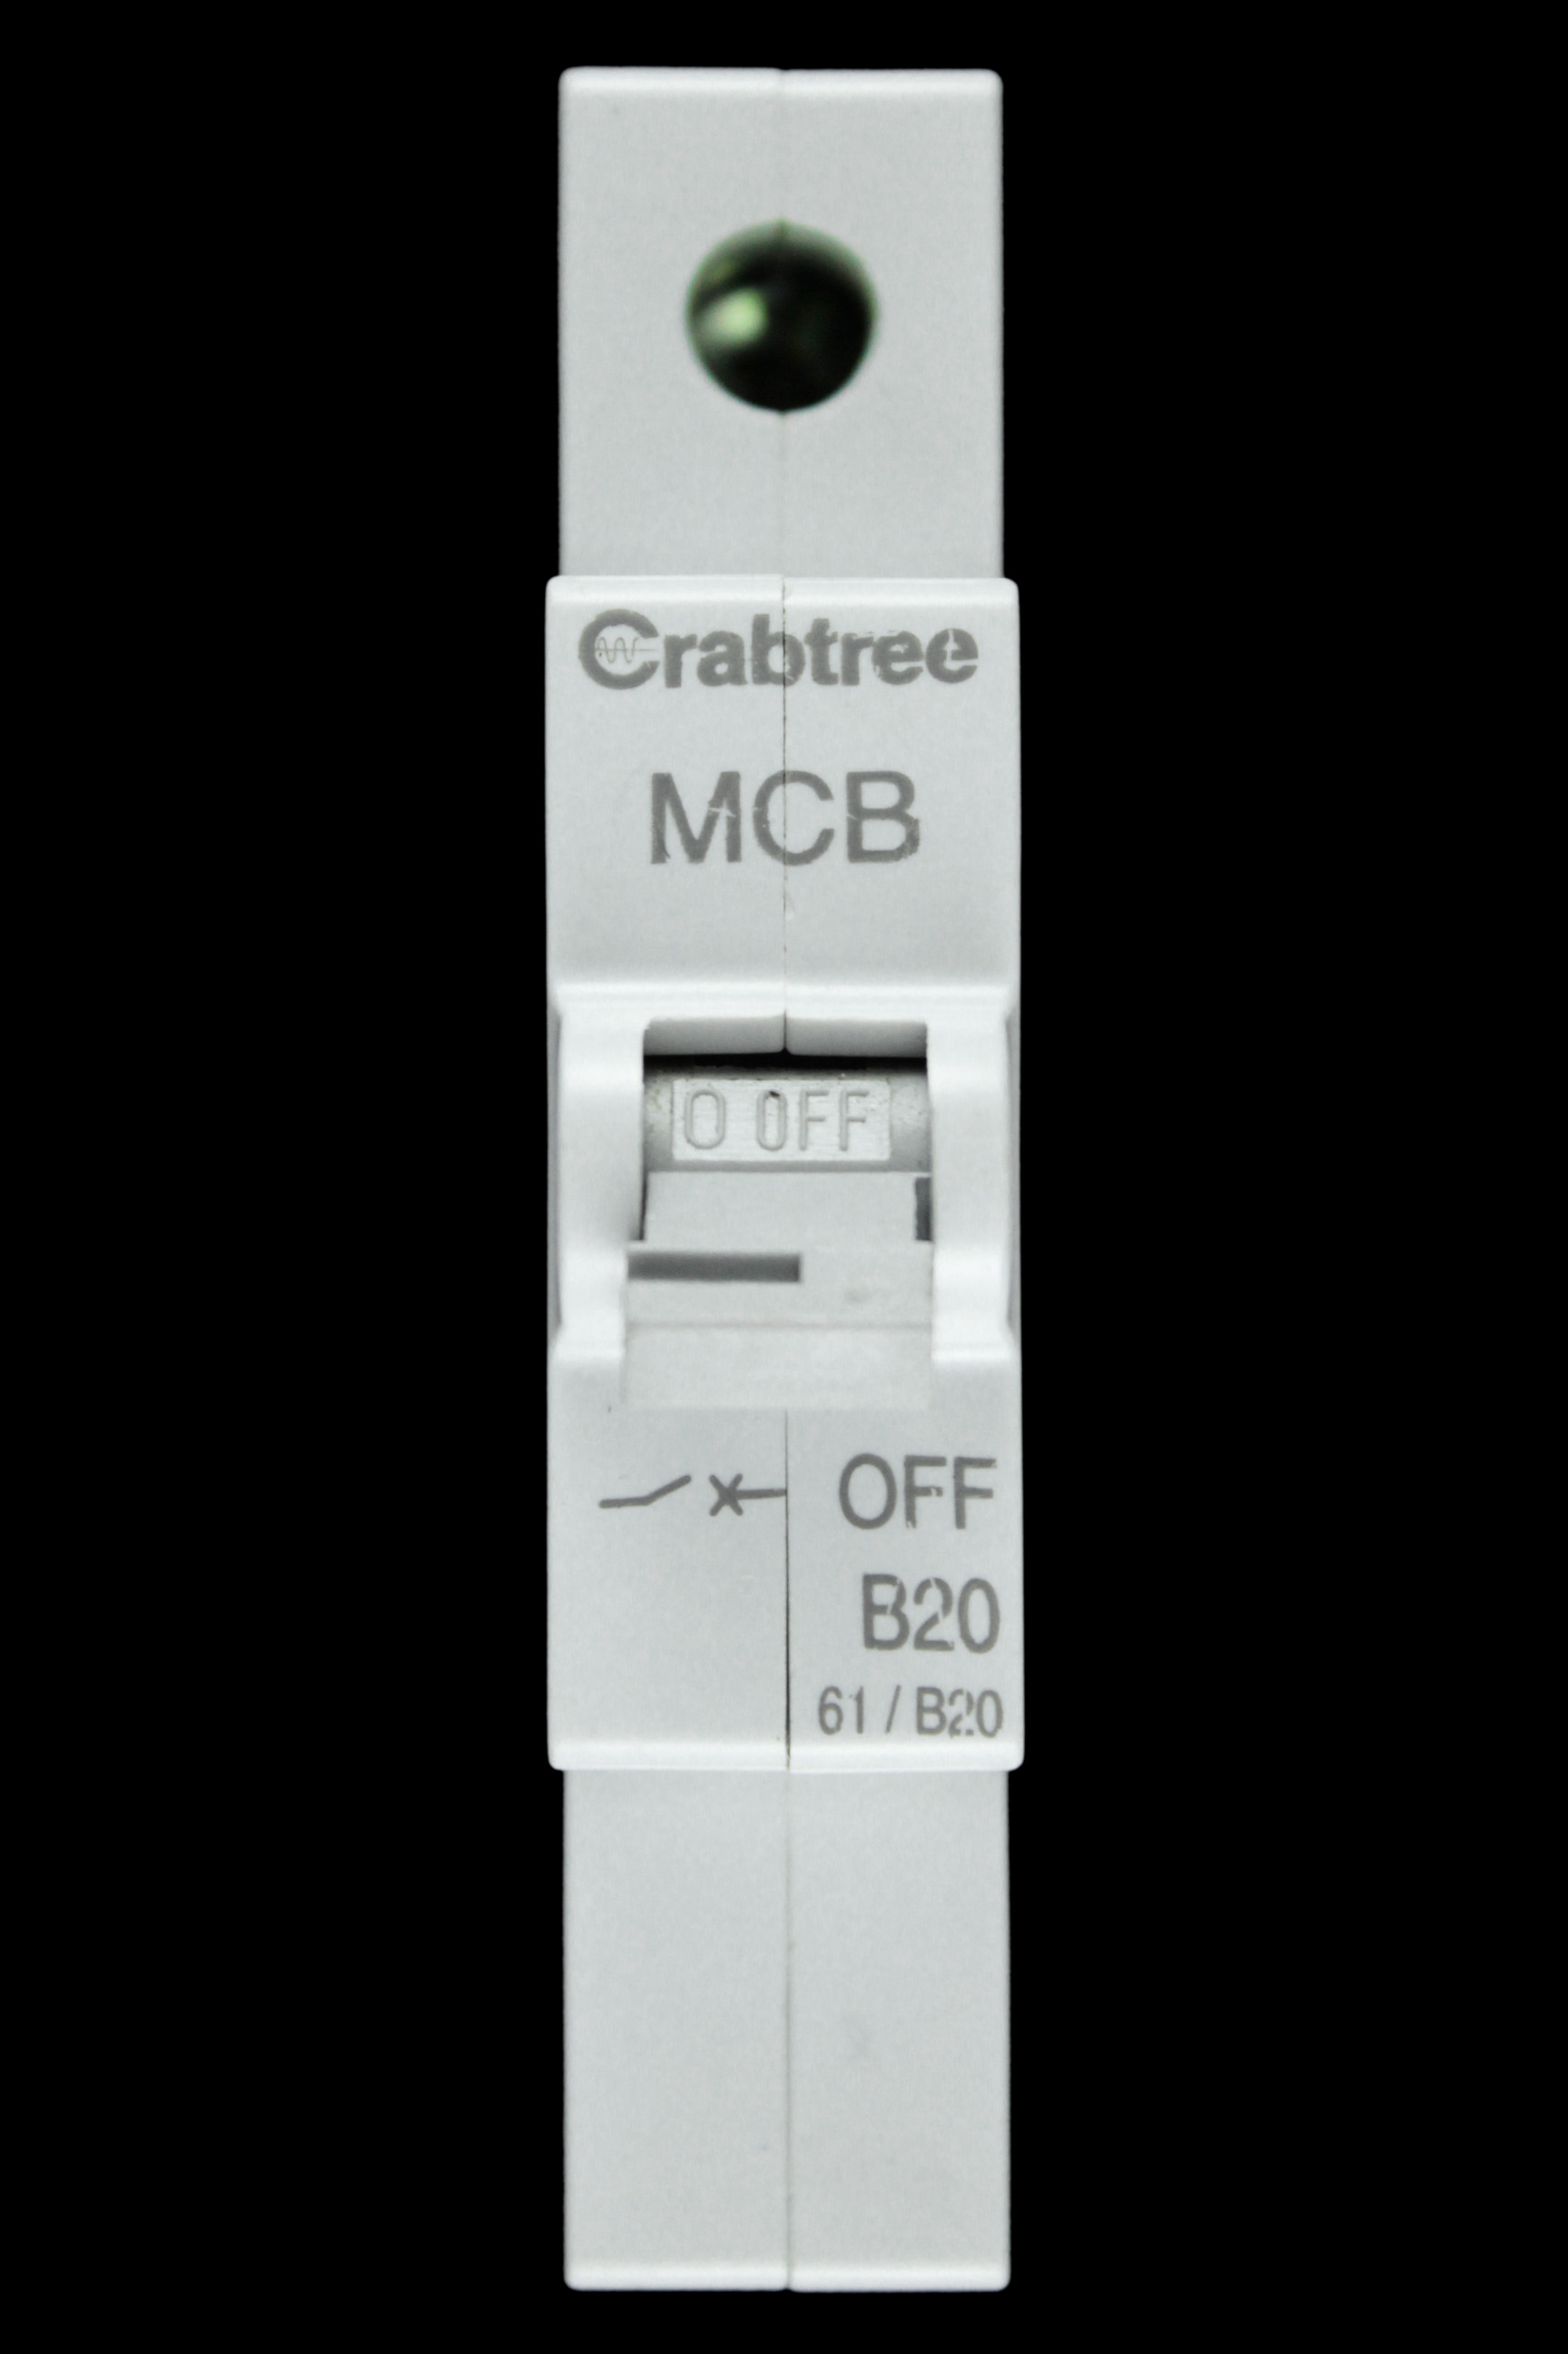 CRABTREE 20 AMP CURVE B 6kA MCB CIRCUIT BREAKER 61/B20 STARBREAKER G